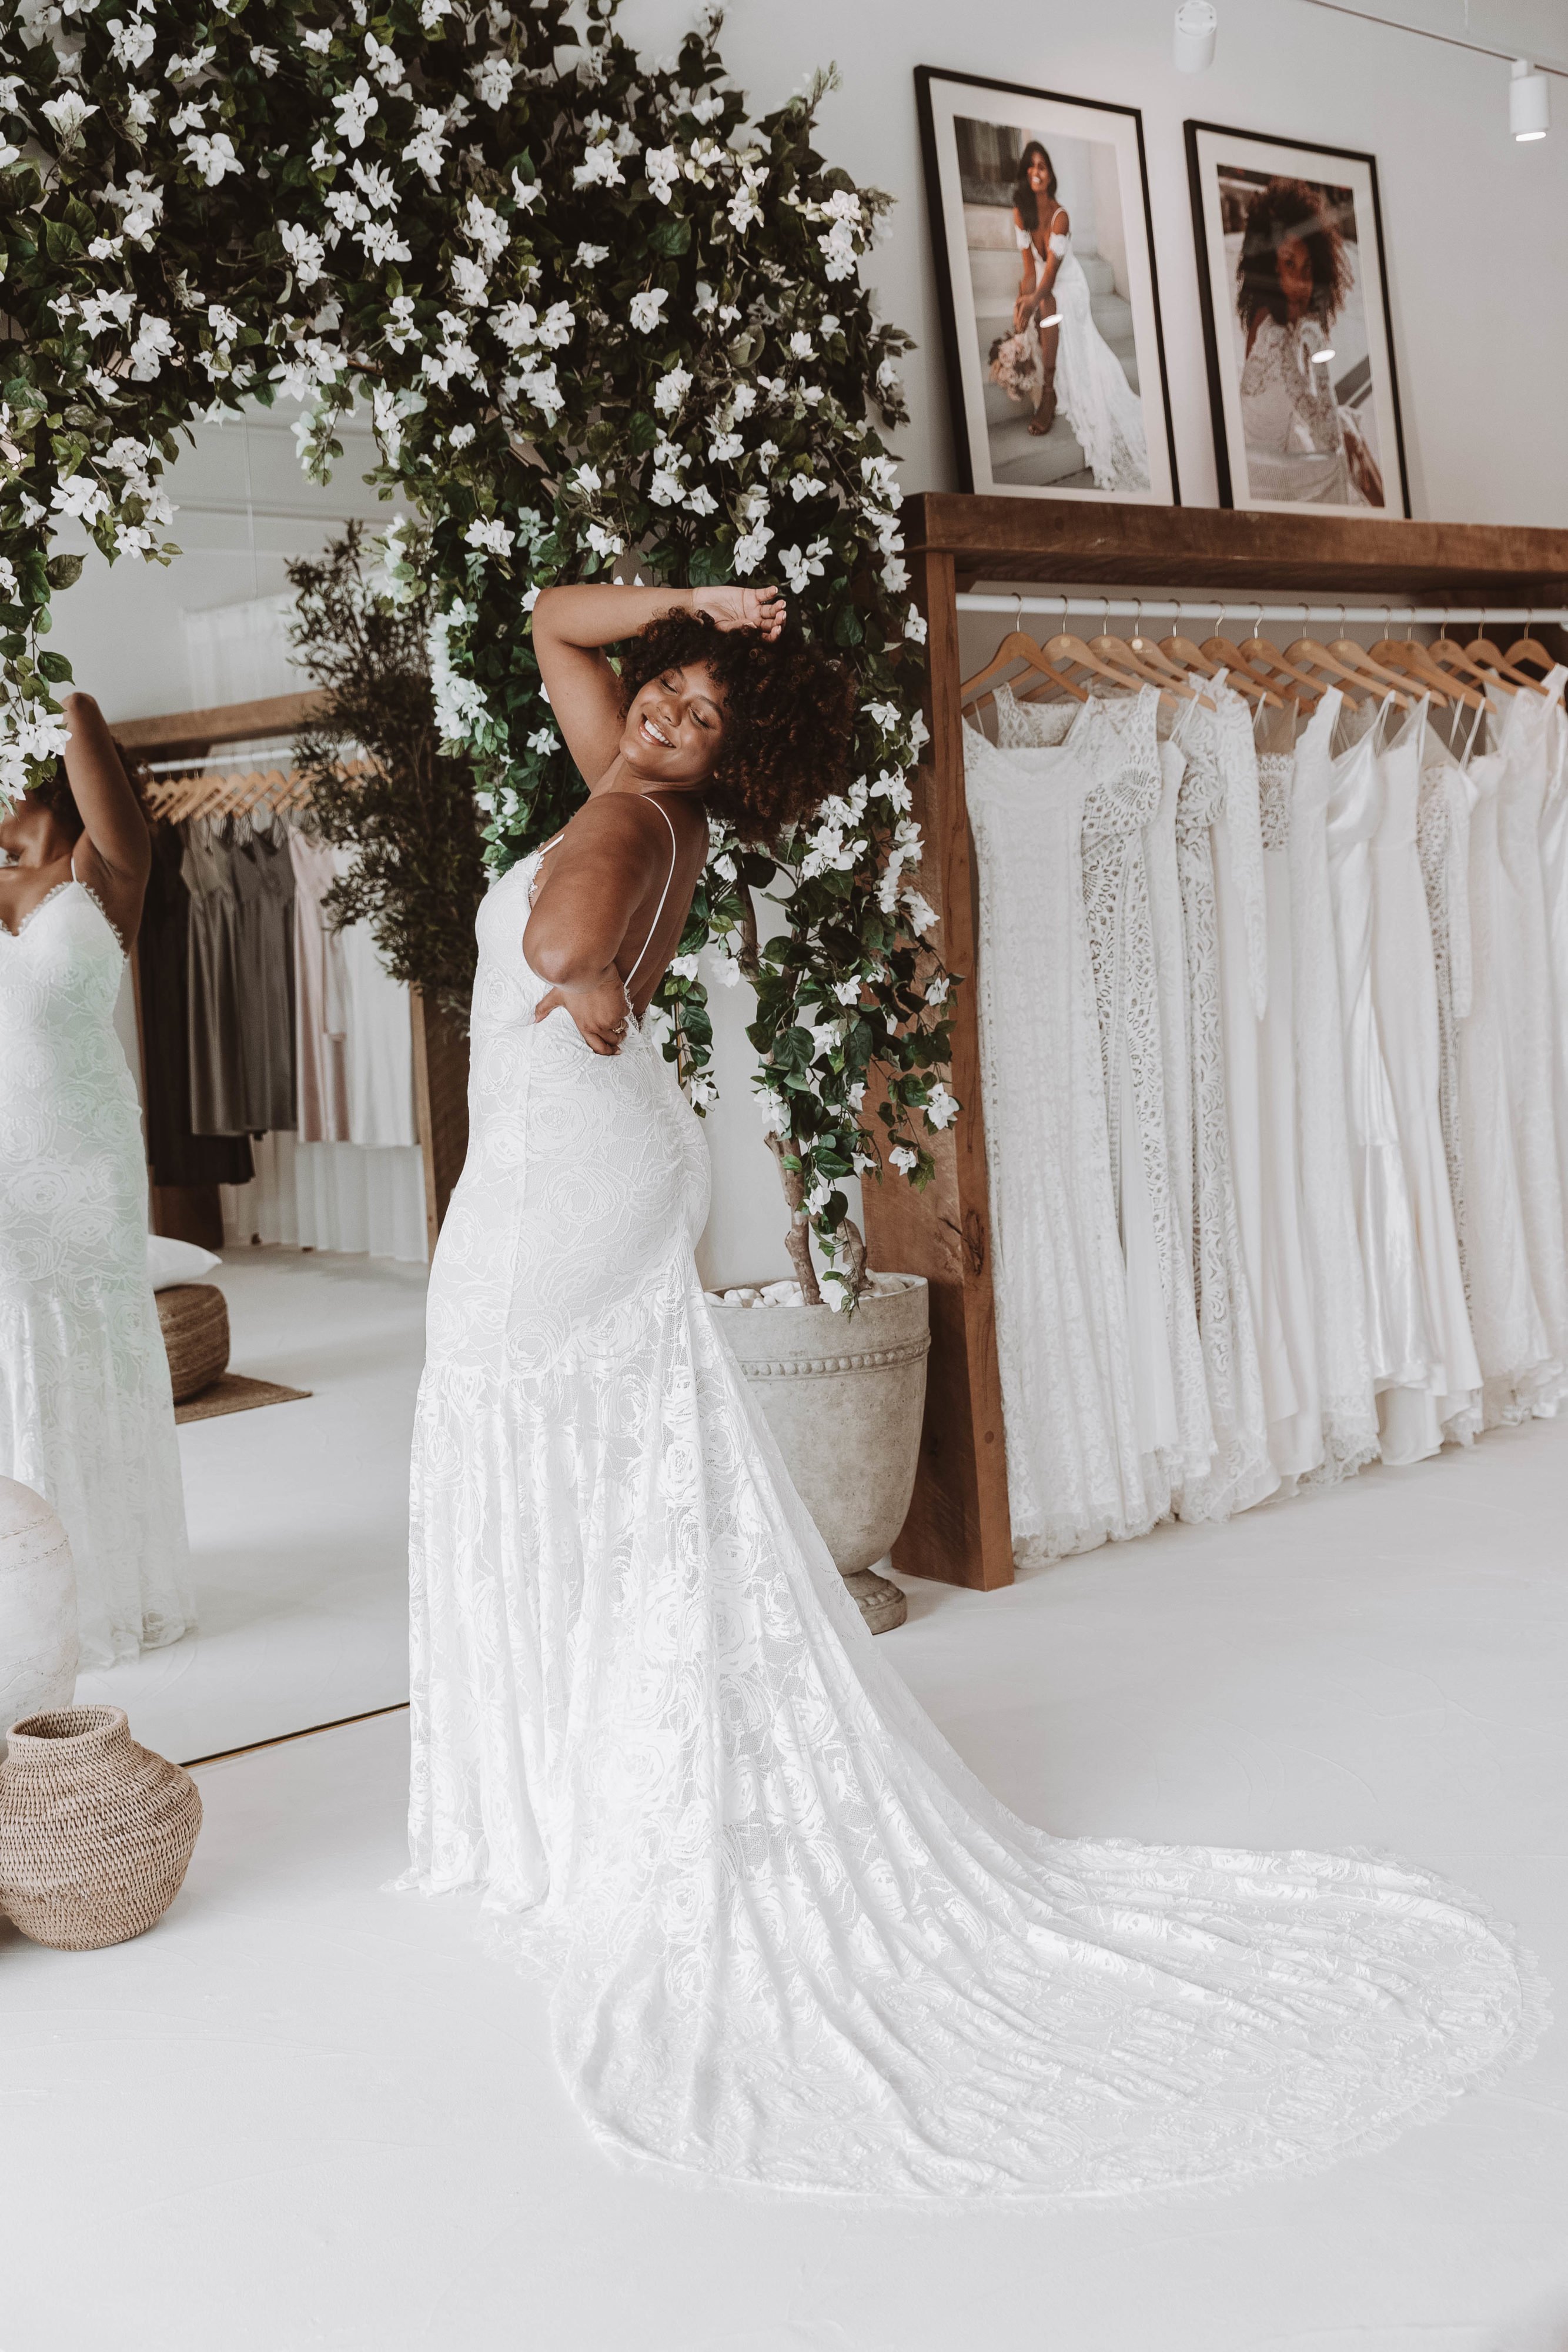 Australian-Based Luxury Wedding Dress Brand Opens Showroom in DC